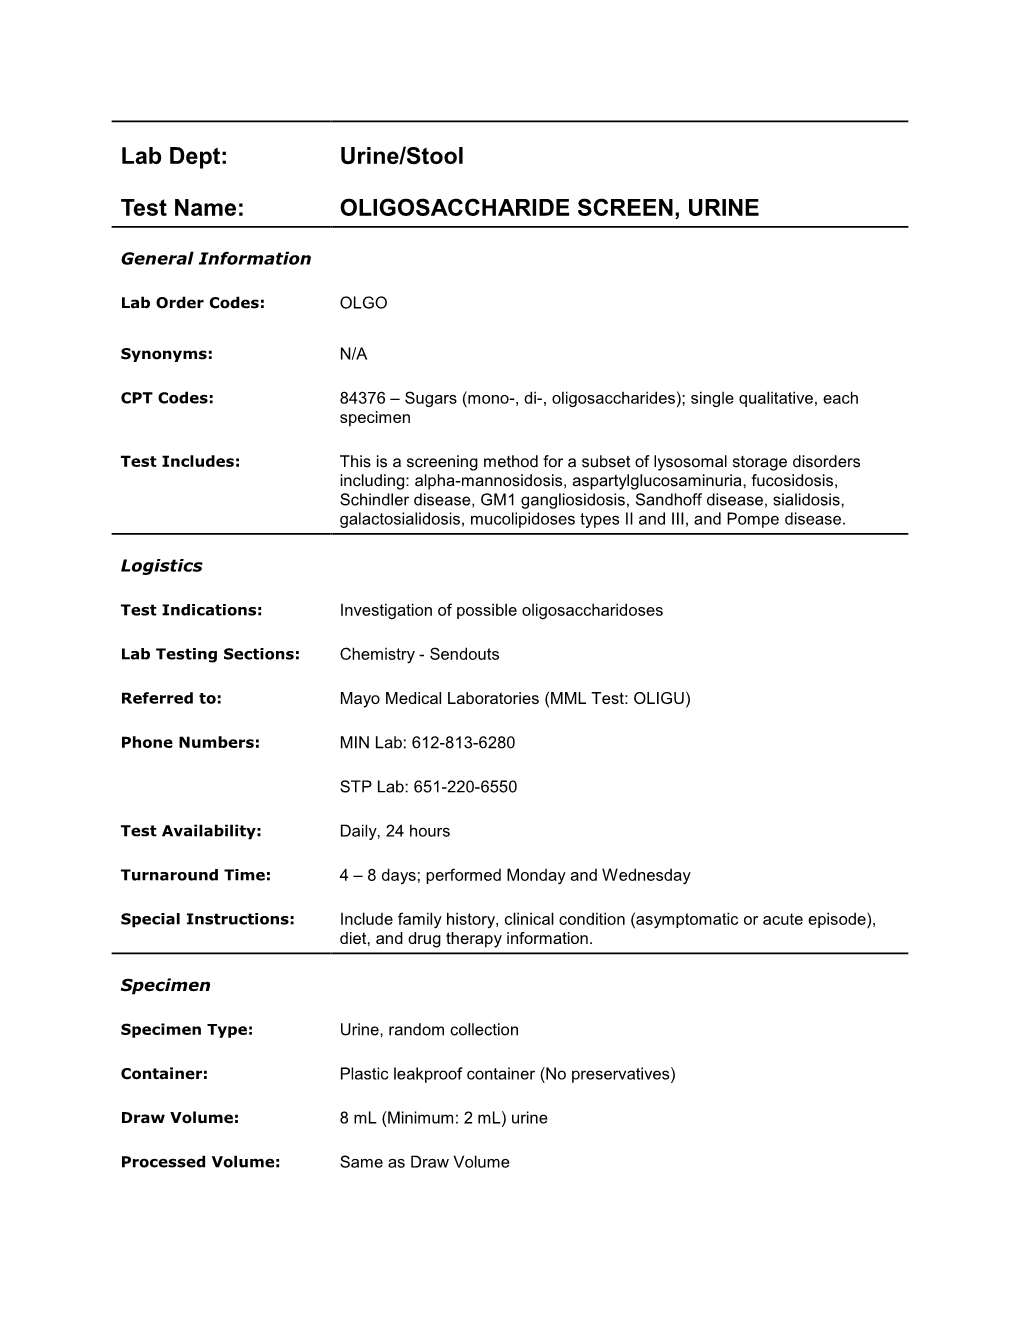 Oligosaccharide Screen, Urine